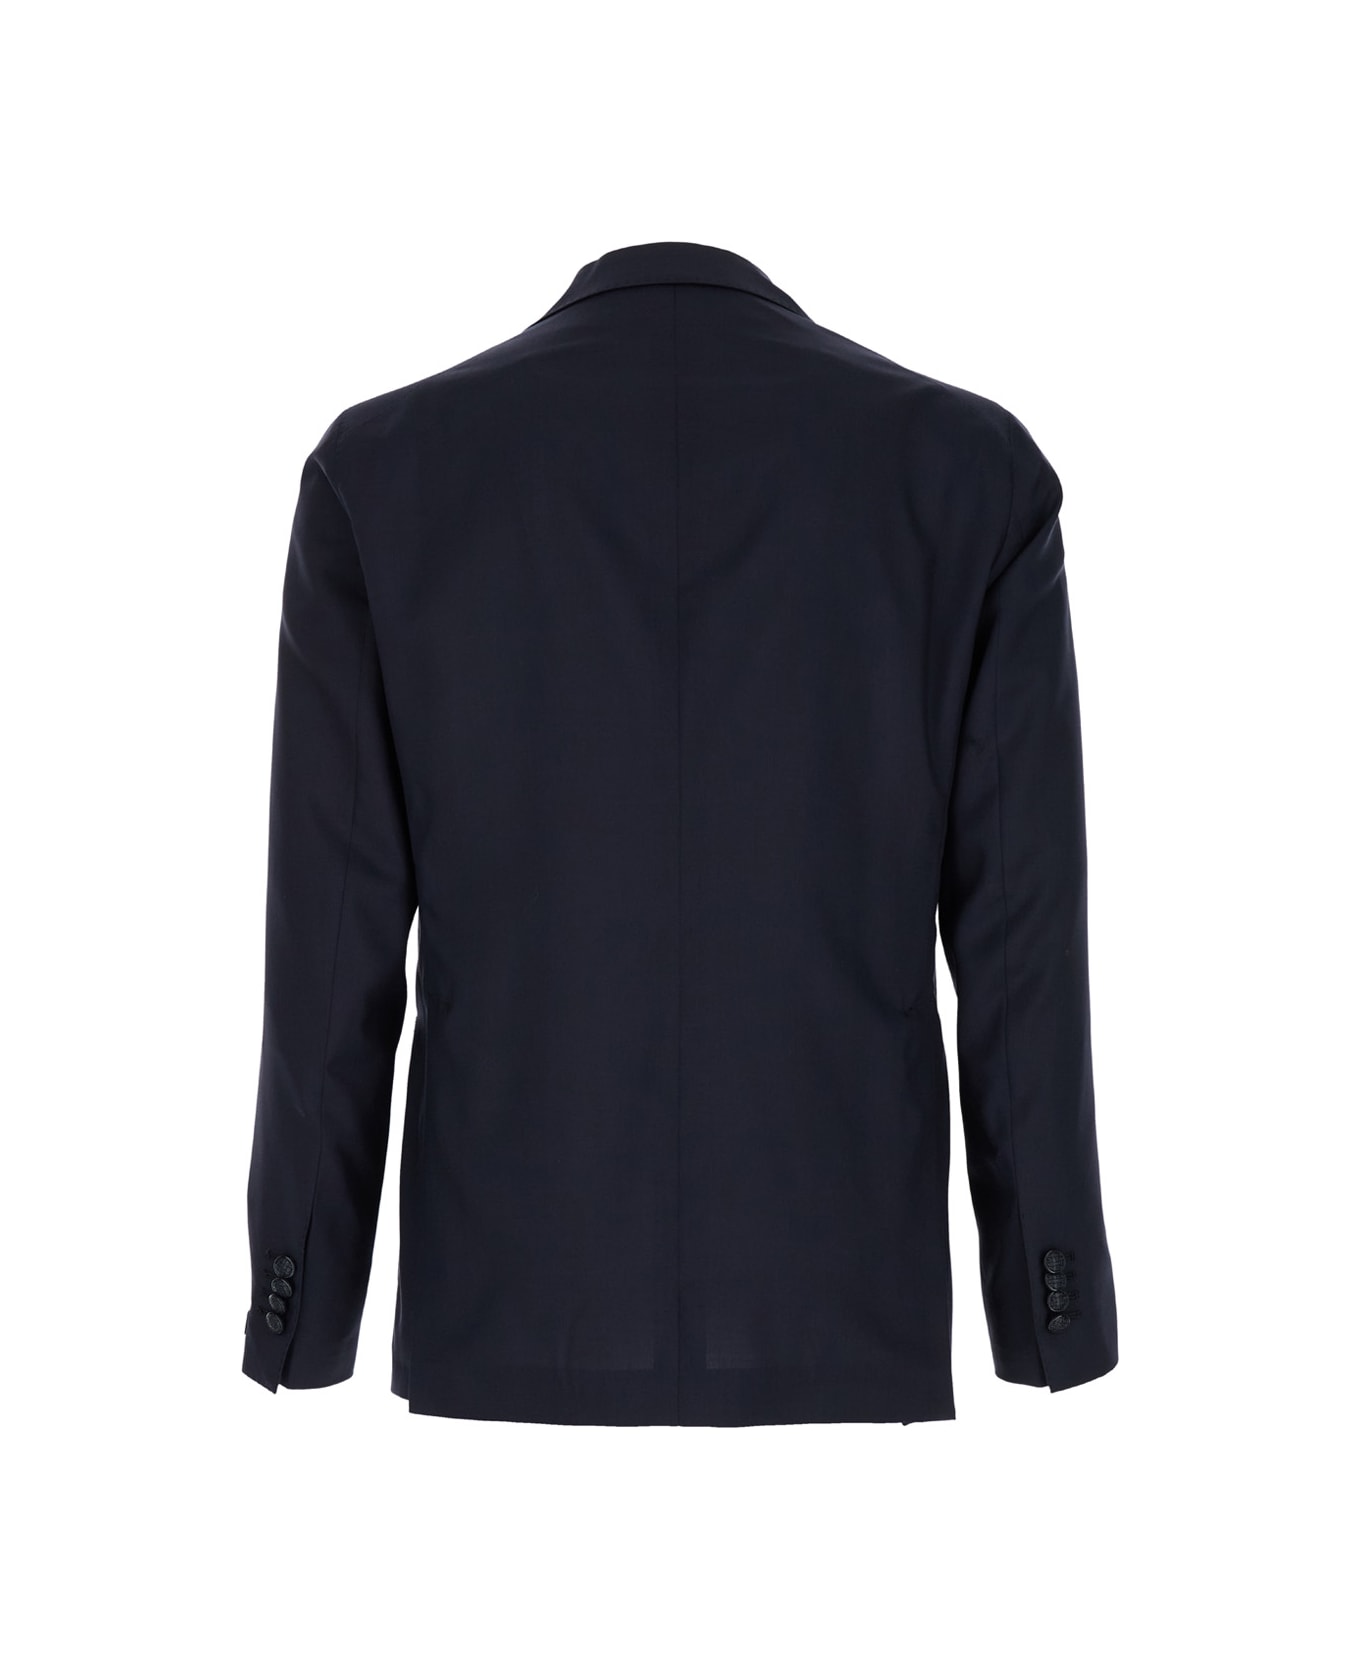 Tagliatore Blue Single-breasted Jacket In Wool And Silk Man - Blu